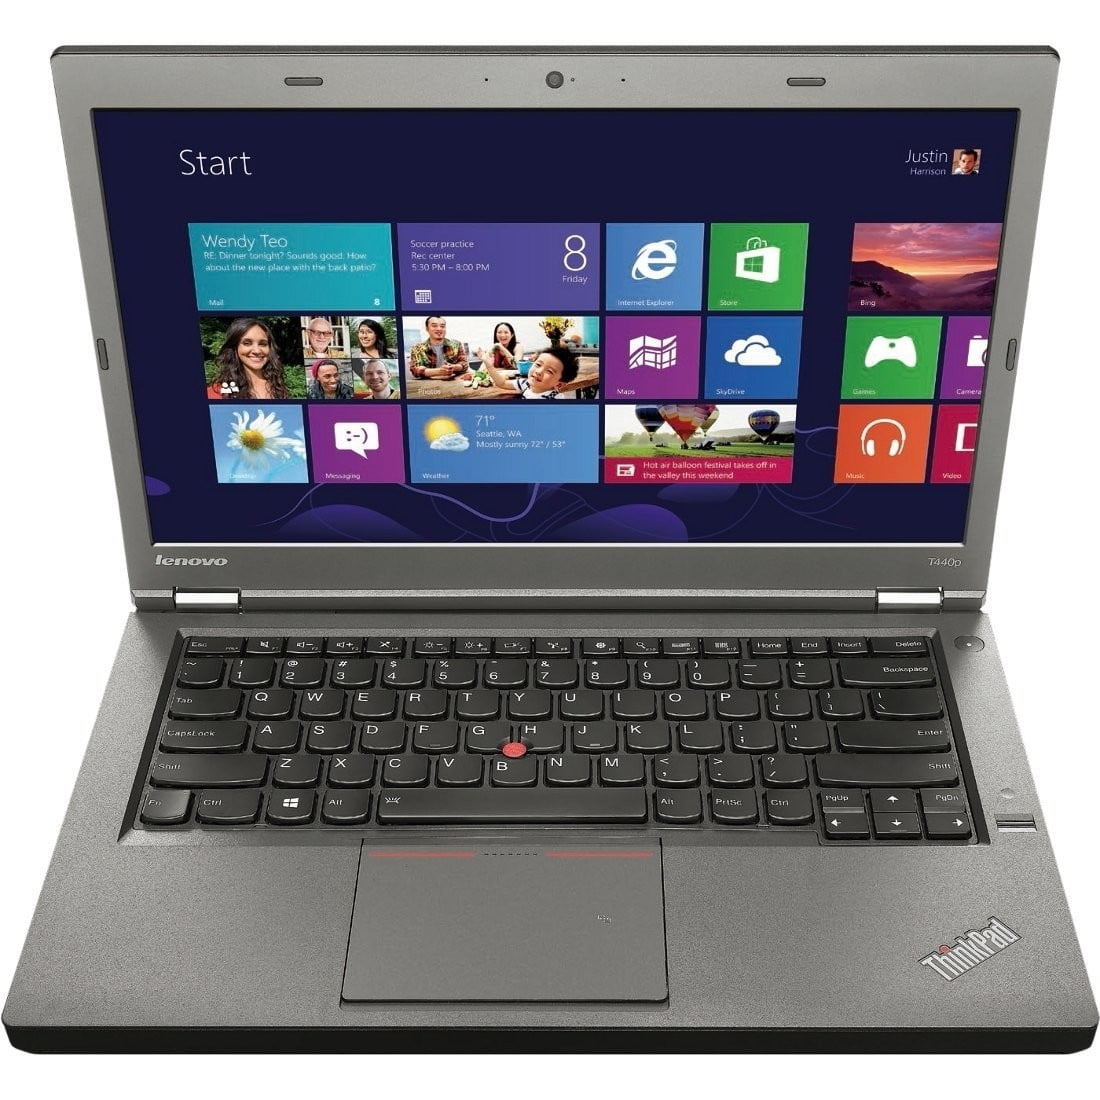 pilot Creep flydende Lenovo ThinkPad T440p 14.0-in USED Laptop - Intel Core i5 4200M 4th Gen  2.50 GHz 8GB 256GB SSD DVD-RW Windows 10 Pro 64-Bit - Webcam, Grade B -  Walmart.com